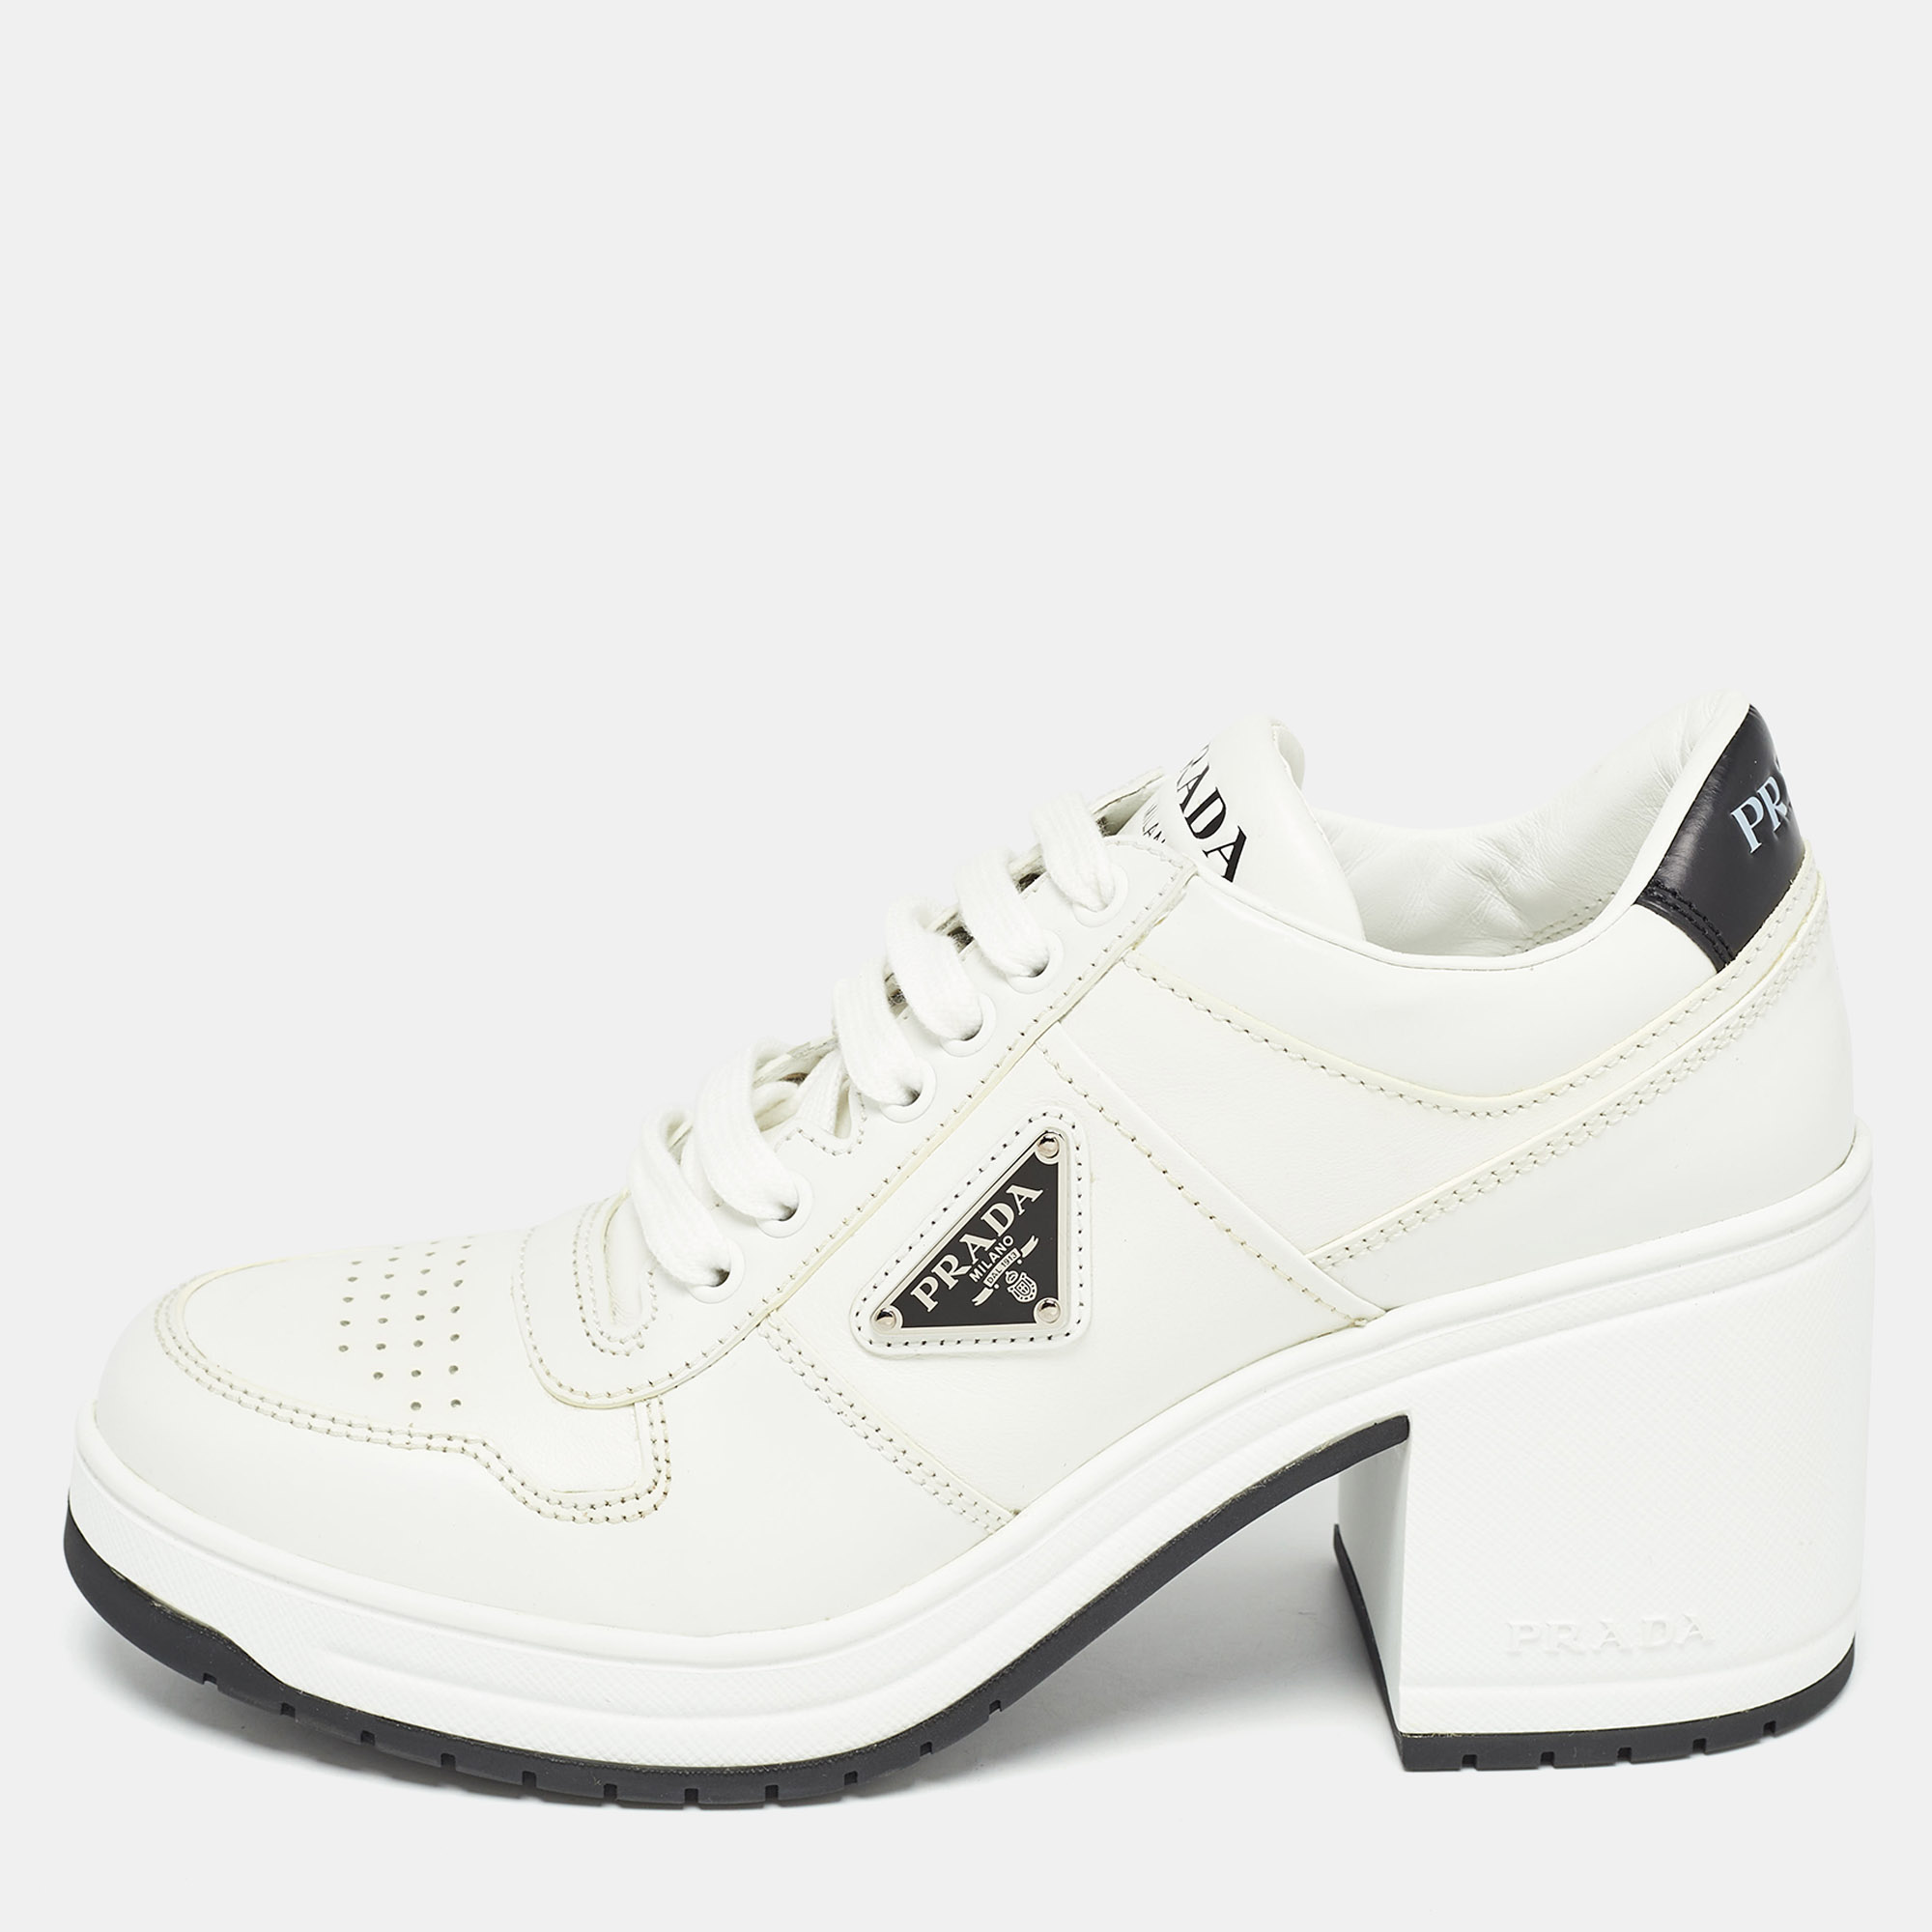 

Prada White/Black Leather Block Heel Sneaker Pumps Size